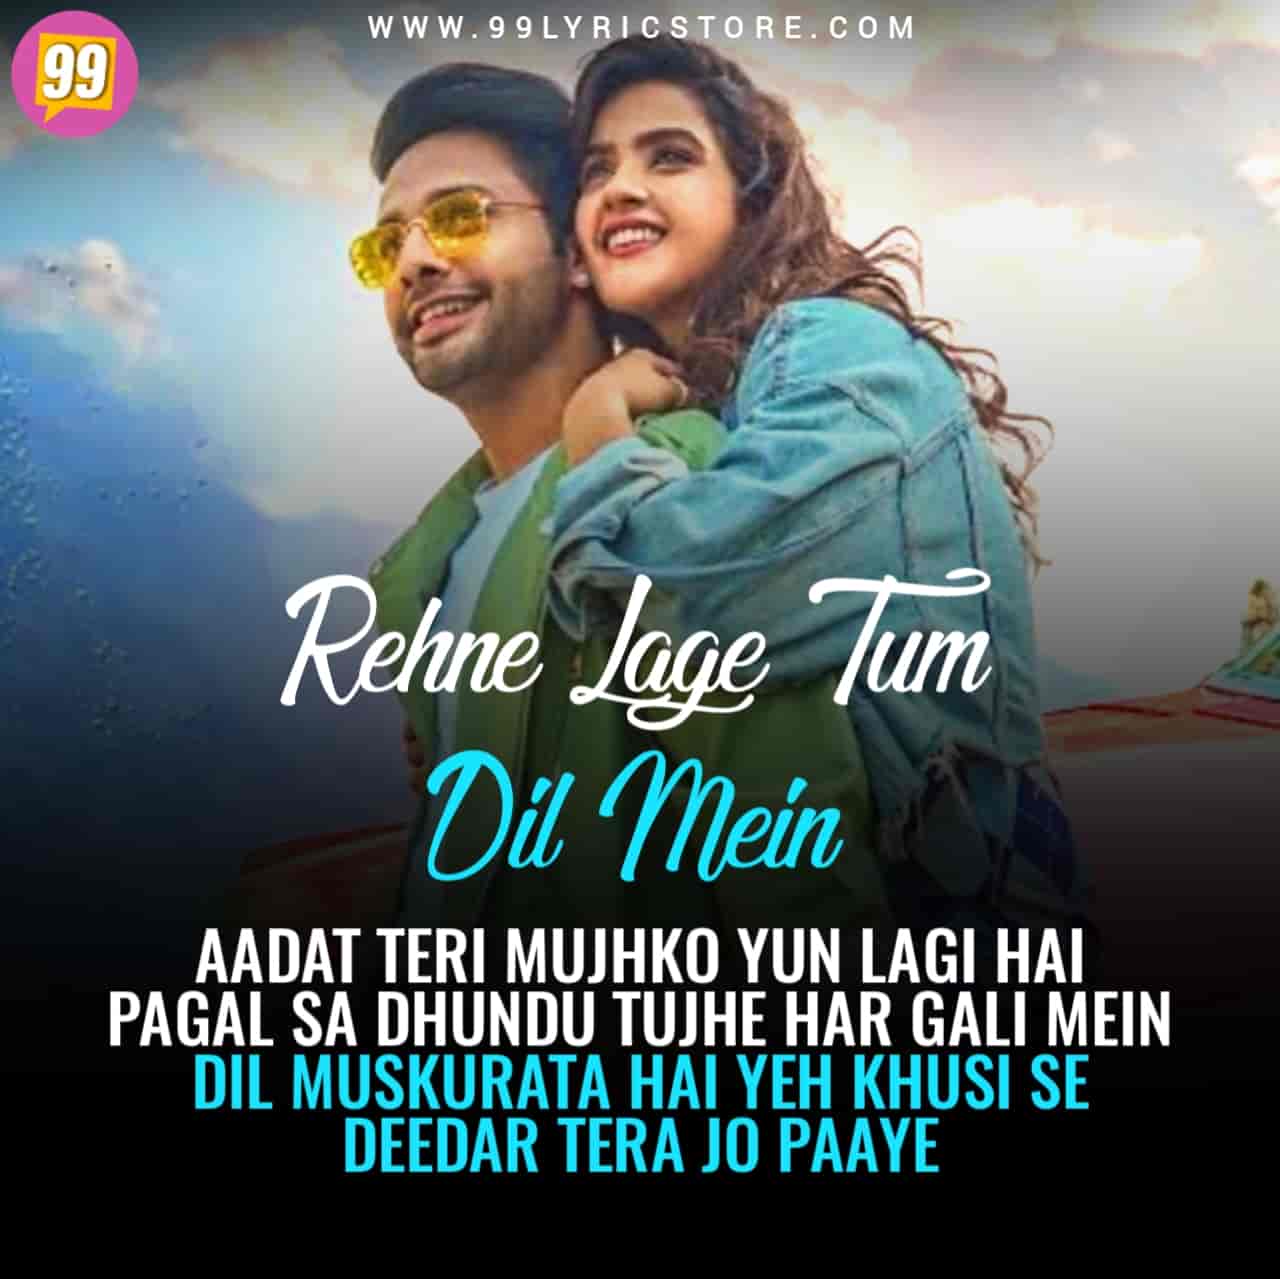 Renhe Lage Tum Dil Mein Song Lyrics Image Features Stebin Ben And Kavya Thapar